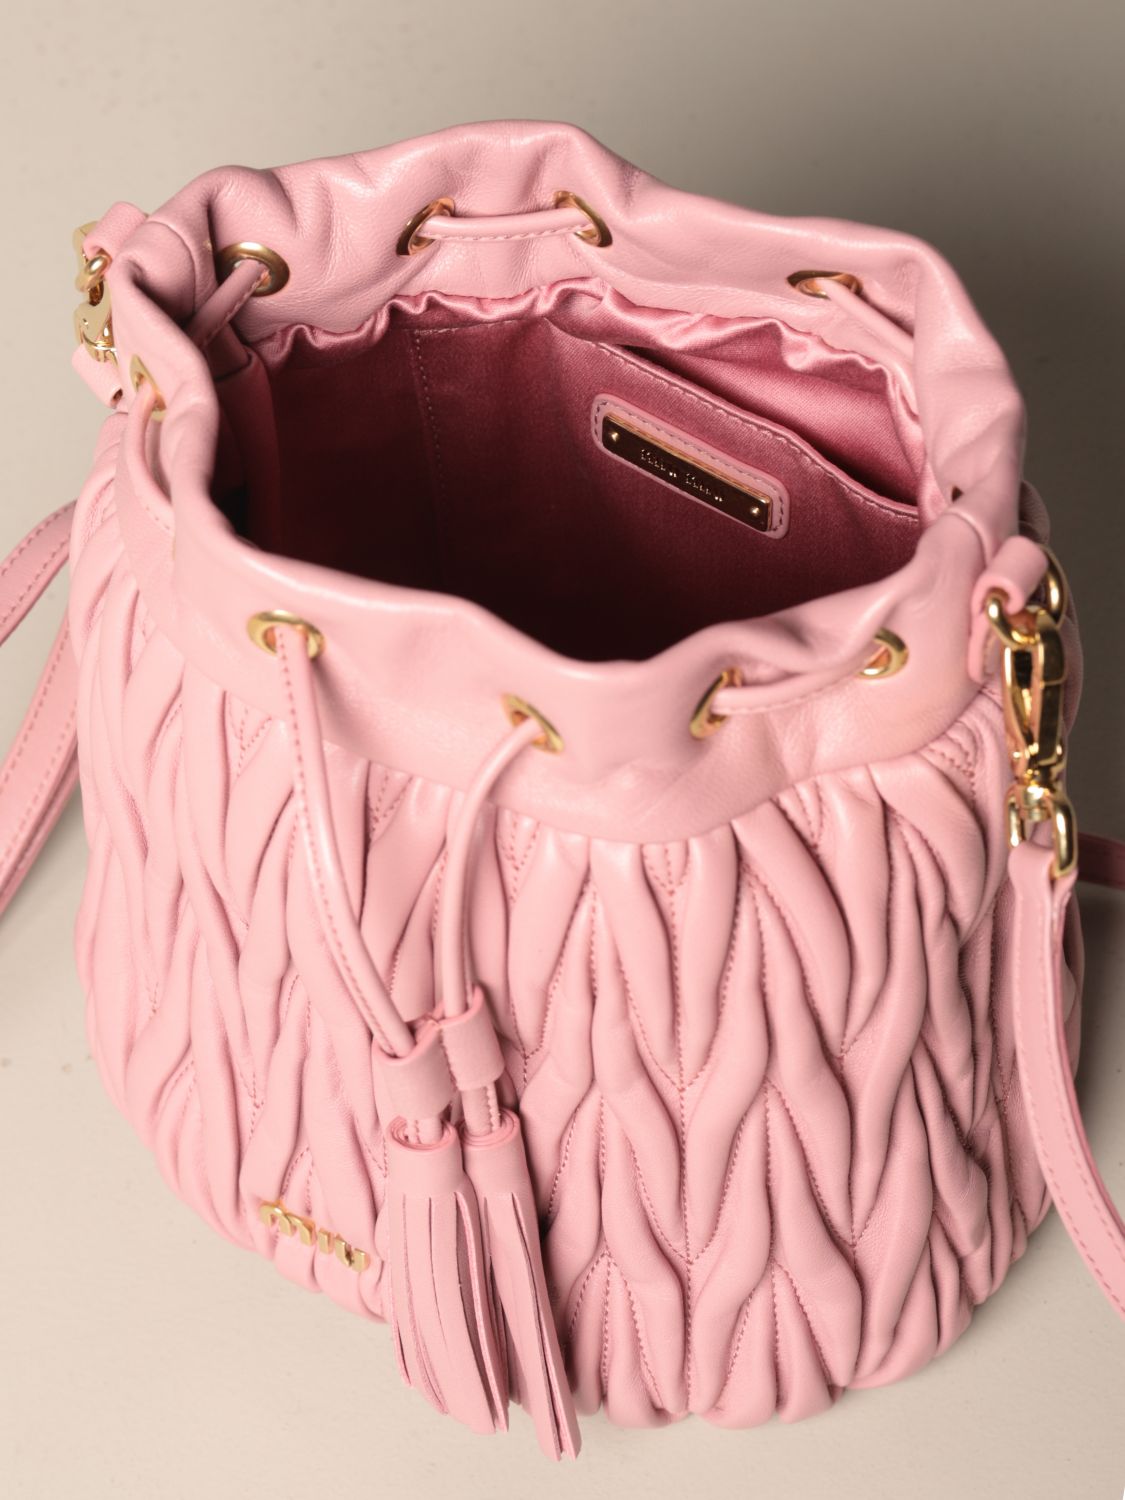 Bow bag leather handbag Miu Miu Pink in Leather - 28587484